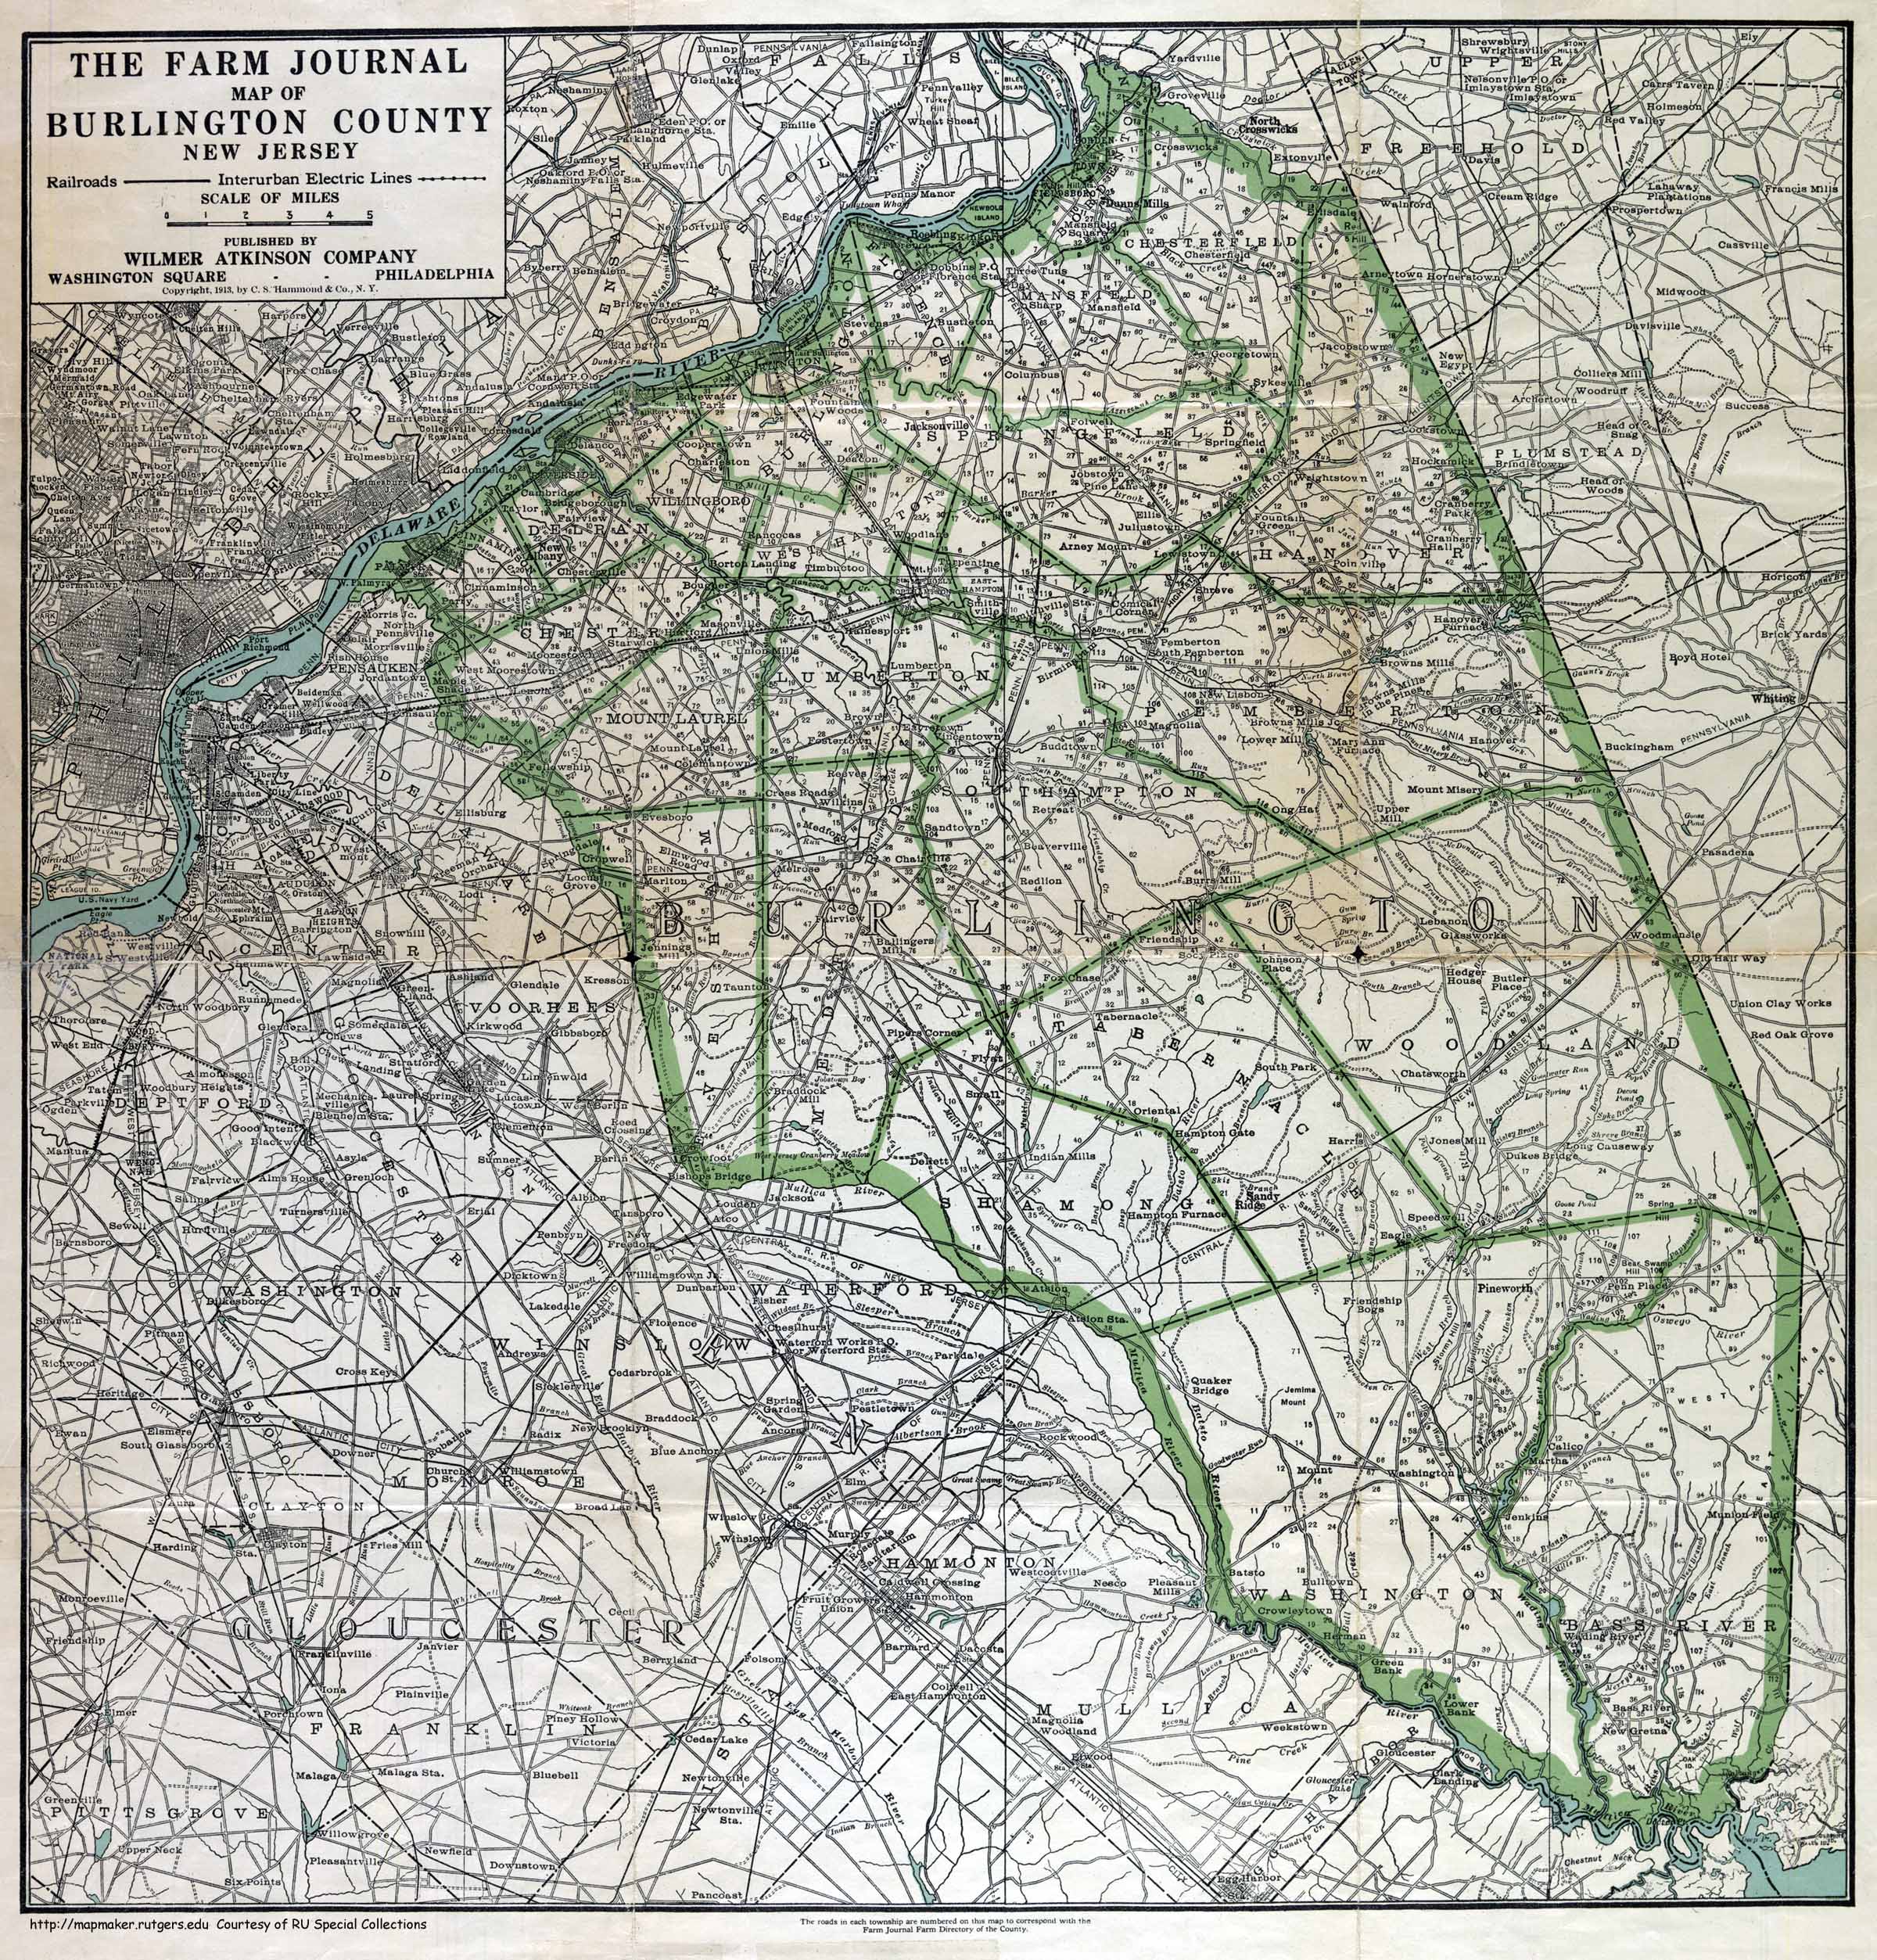 [https://www.westjerseyhistory.org/maps/countymaps/burlco1912.jpg|https://tse2.mm.bing.net/th/id/OIP.TeTRn4WZiq2tqpOPmJsWkwHaHu?w=160&h=180&c=7&r=0&o=5&pid=1.7<!imgtitle